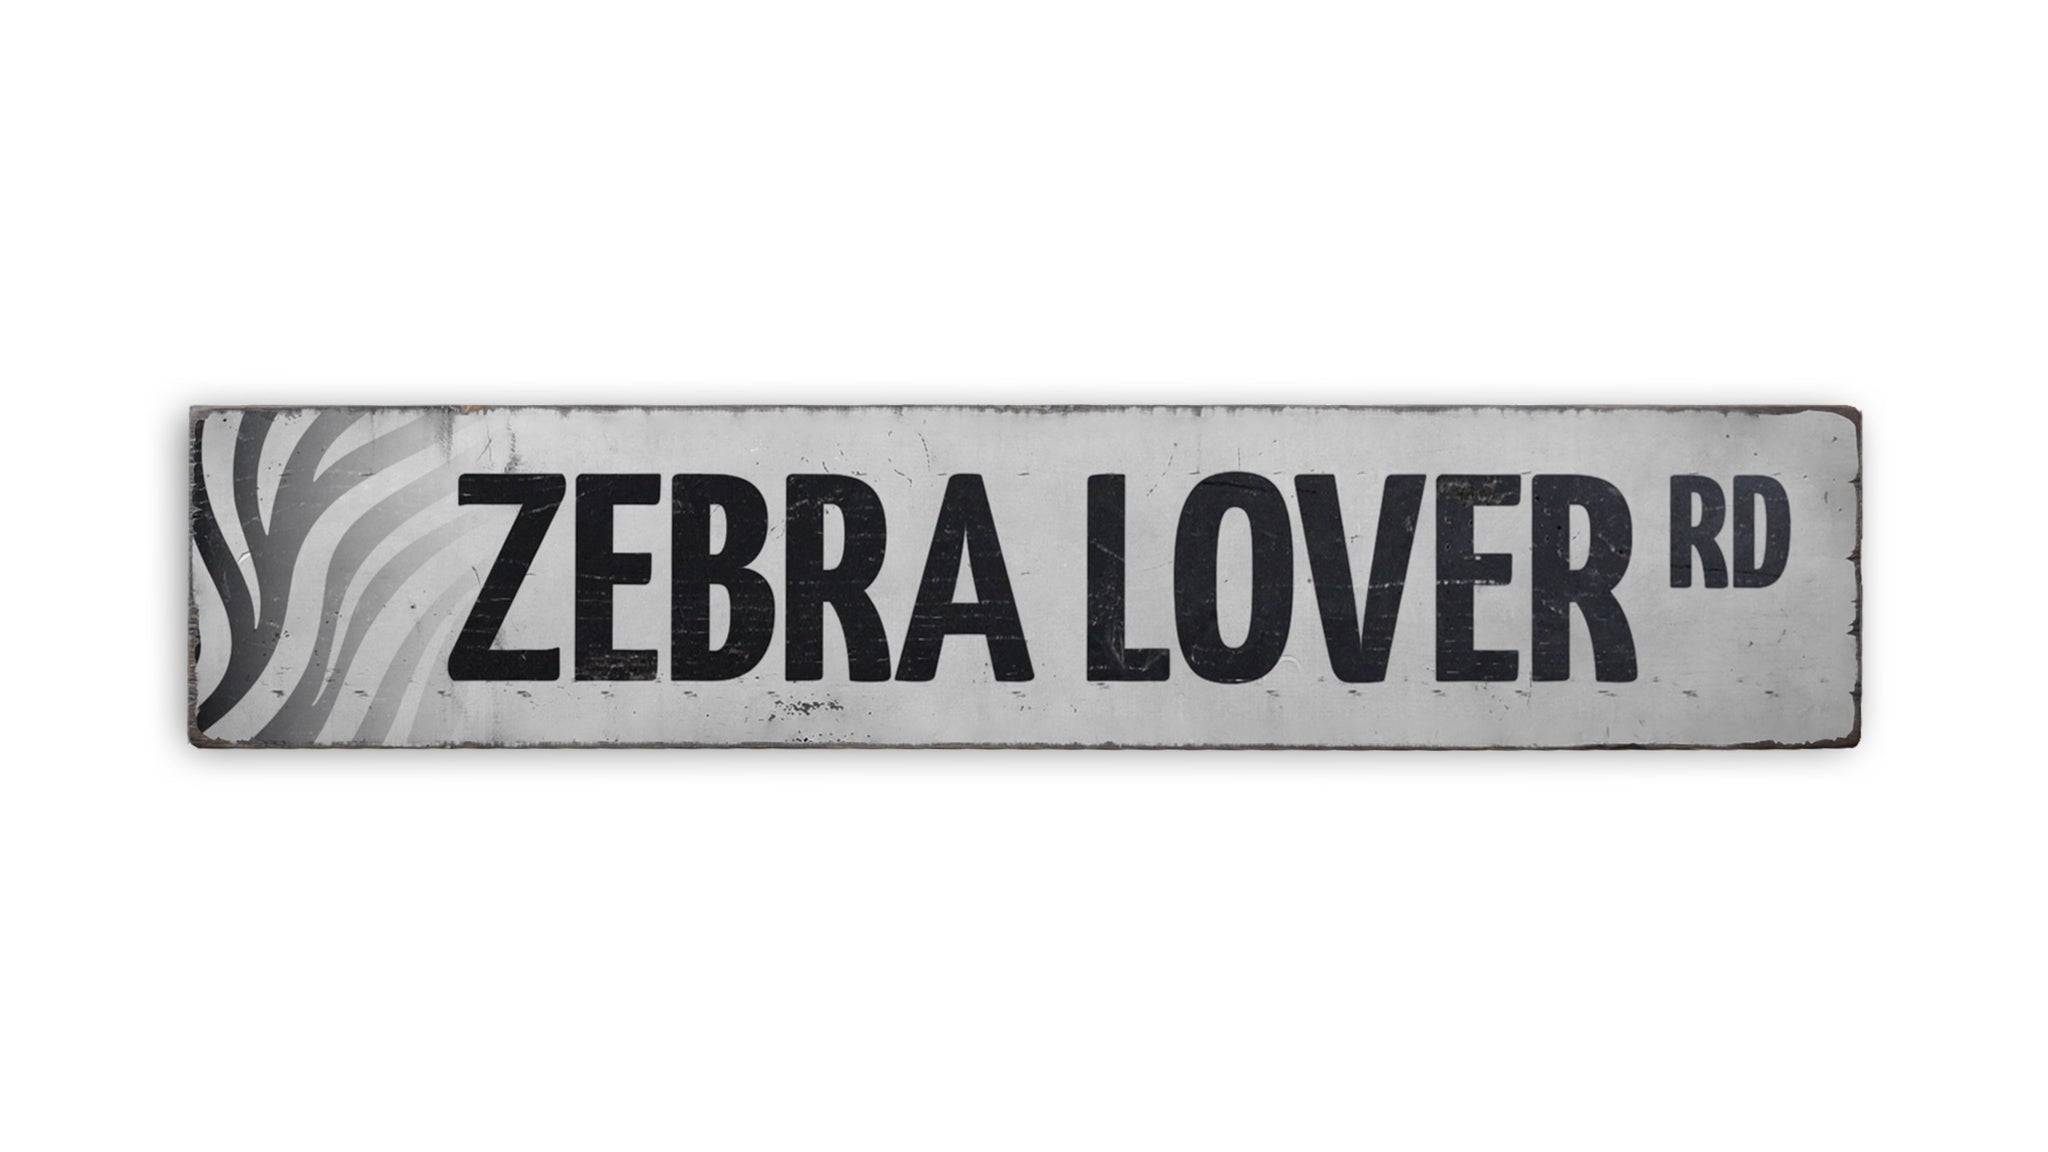 Zebra Lover Street Rustic Wood Sign